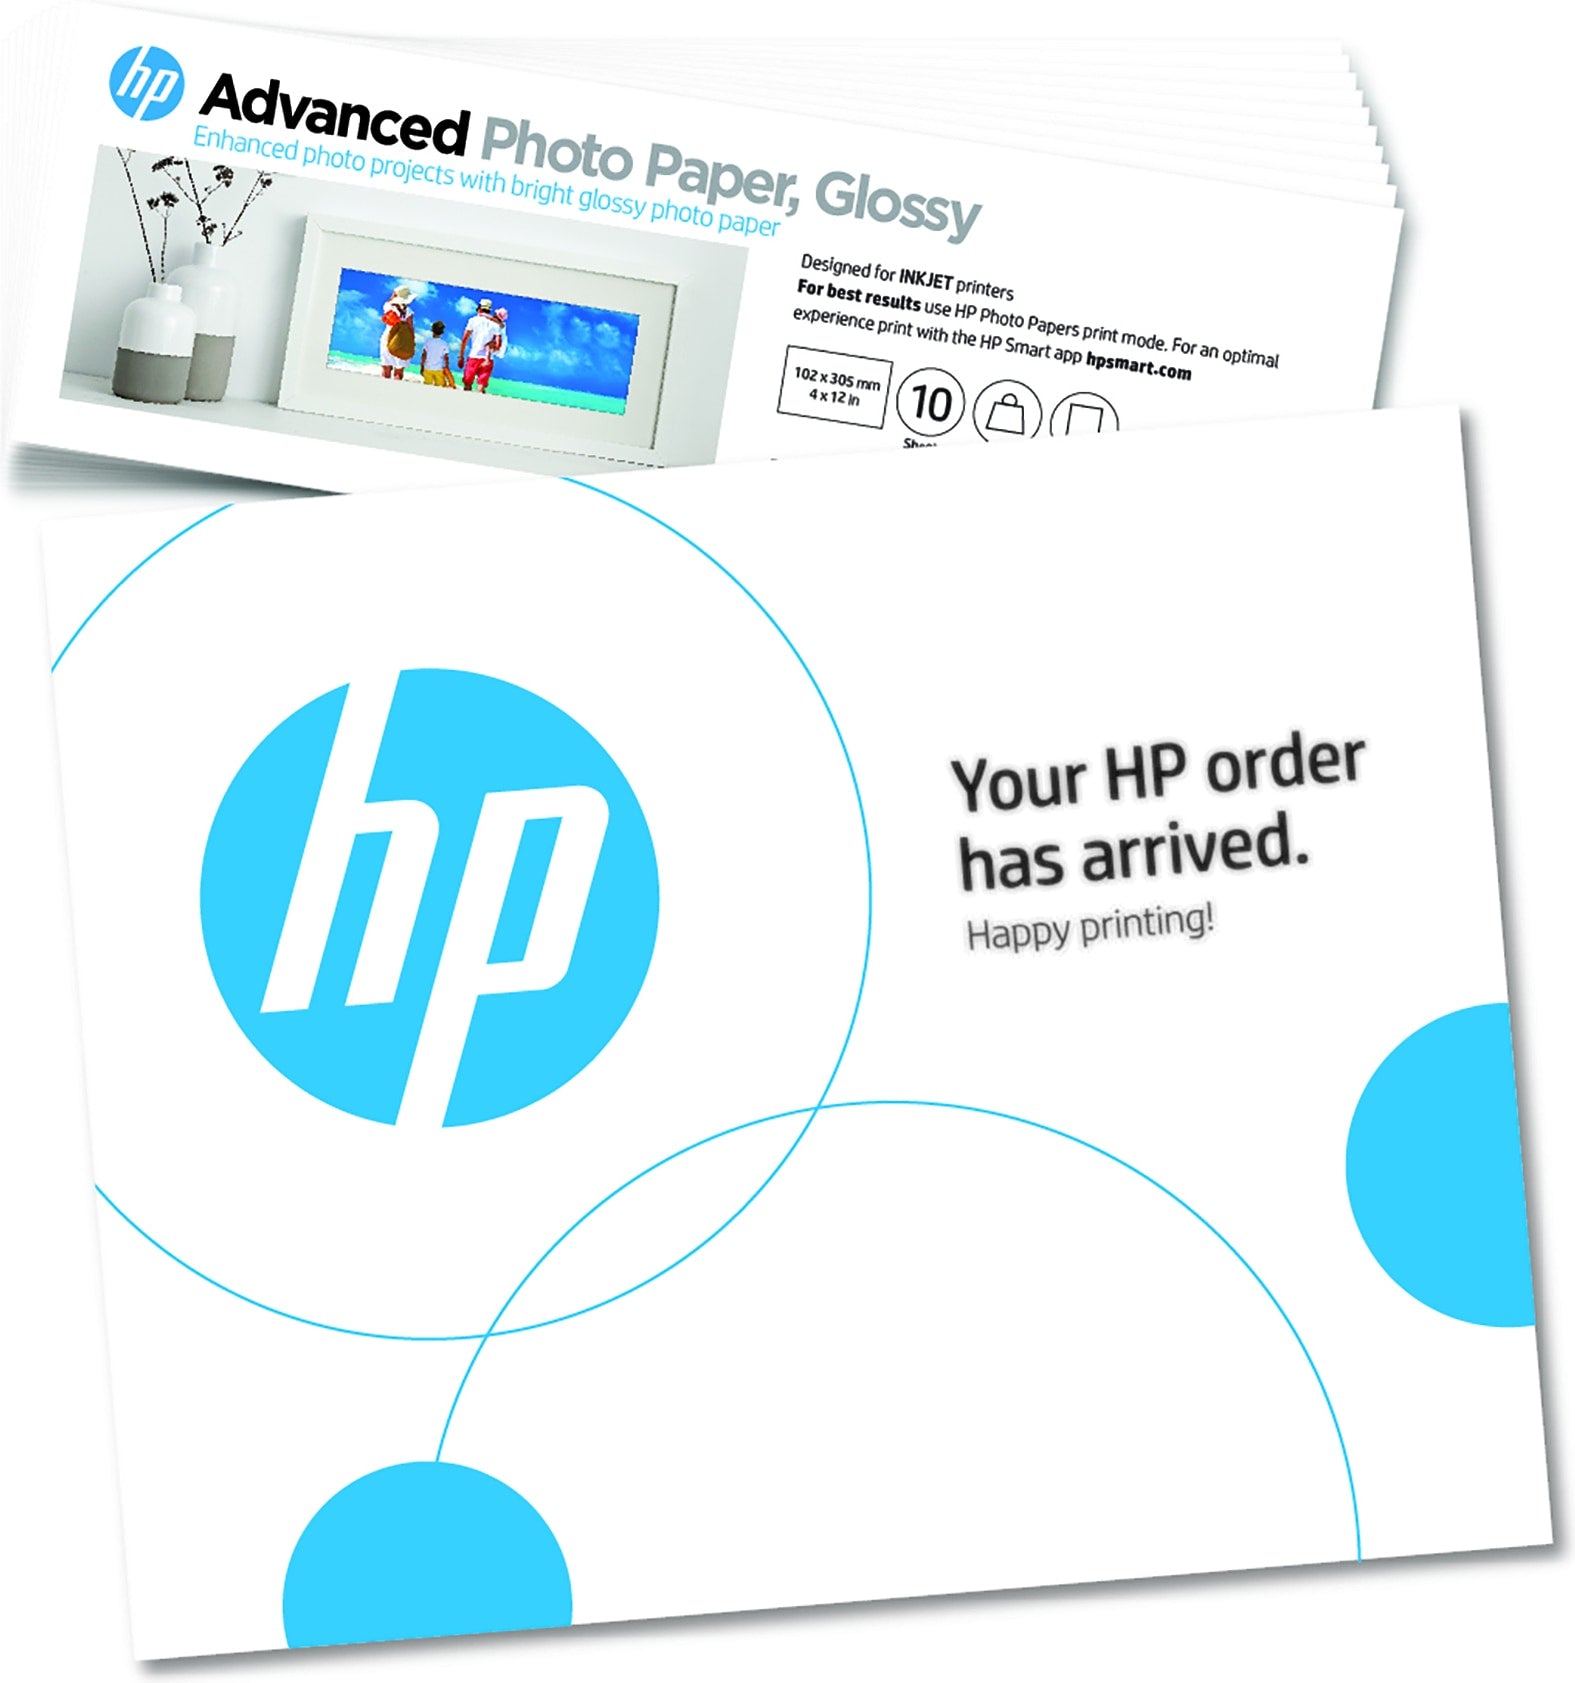 Advanced Photo Paper